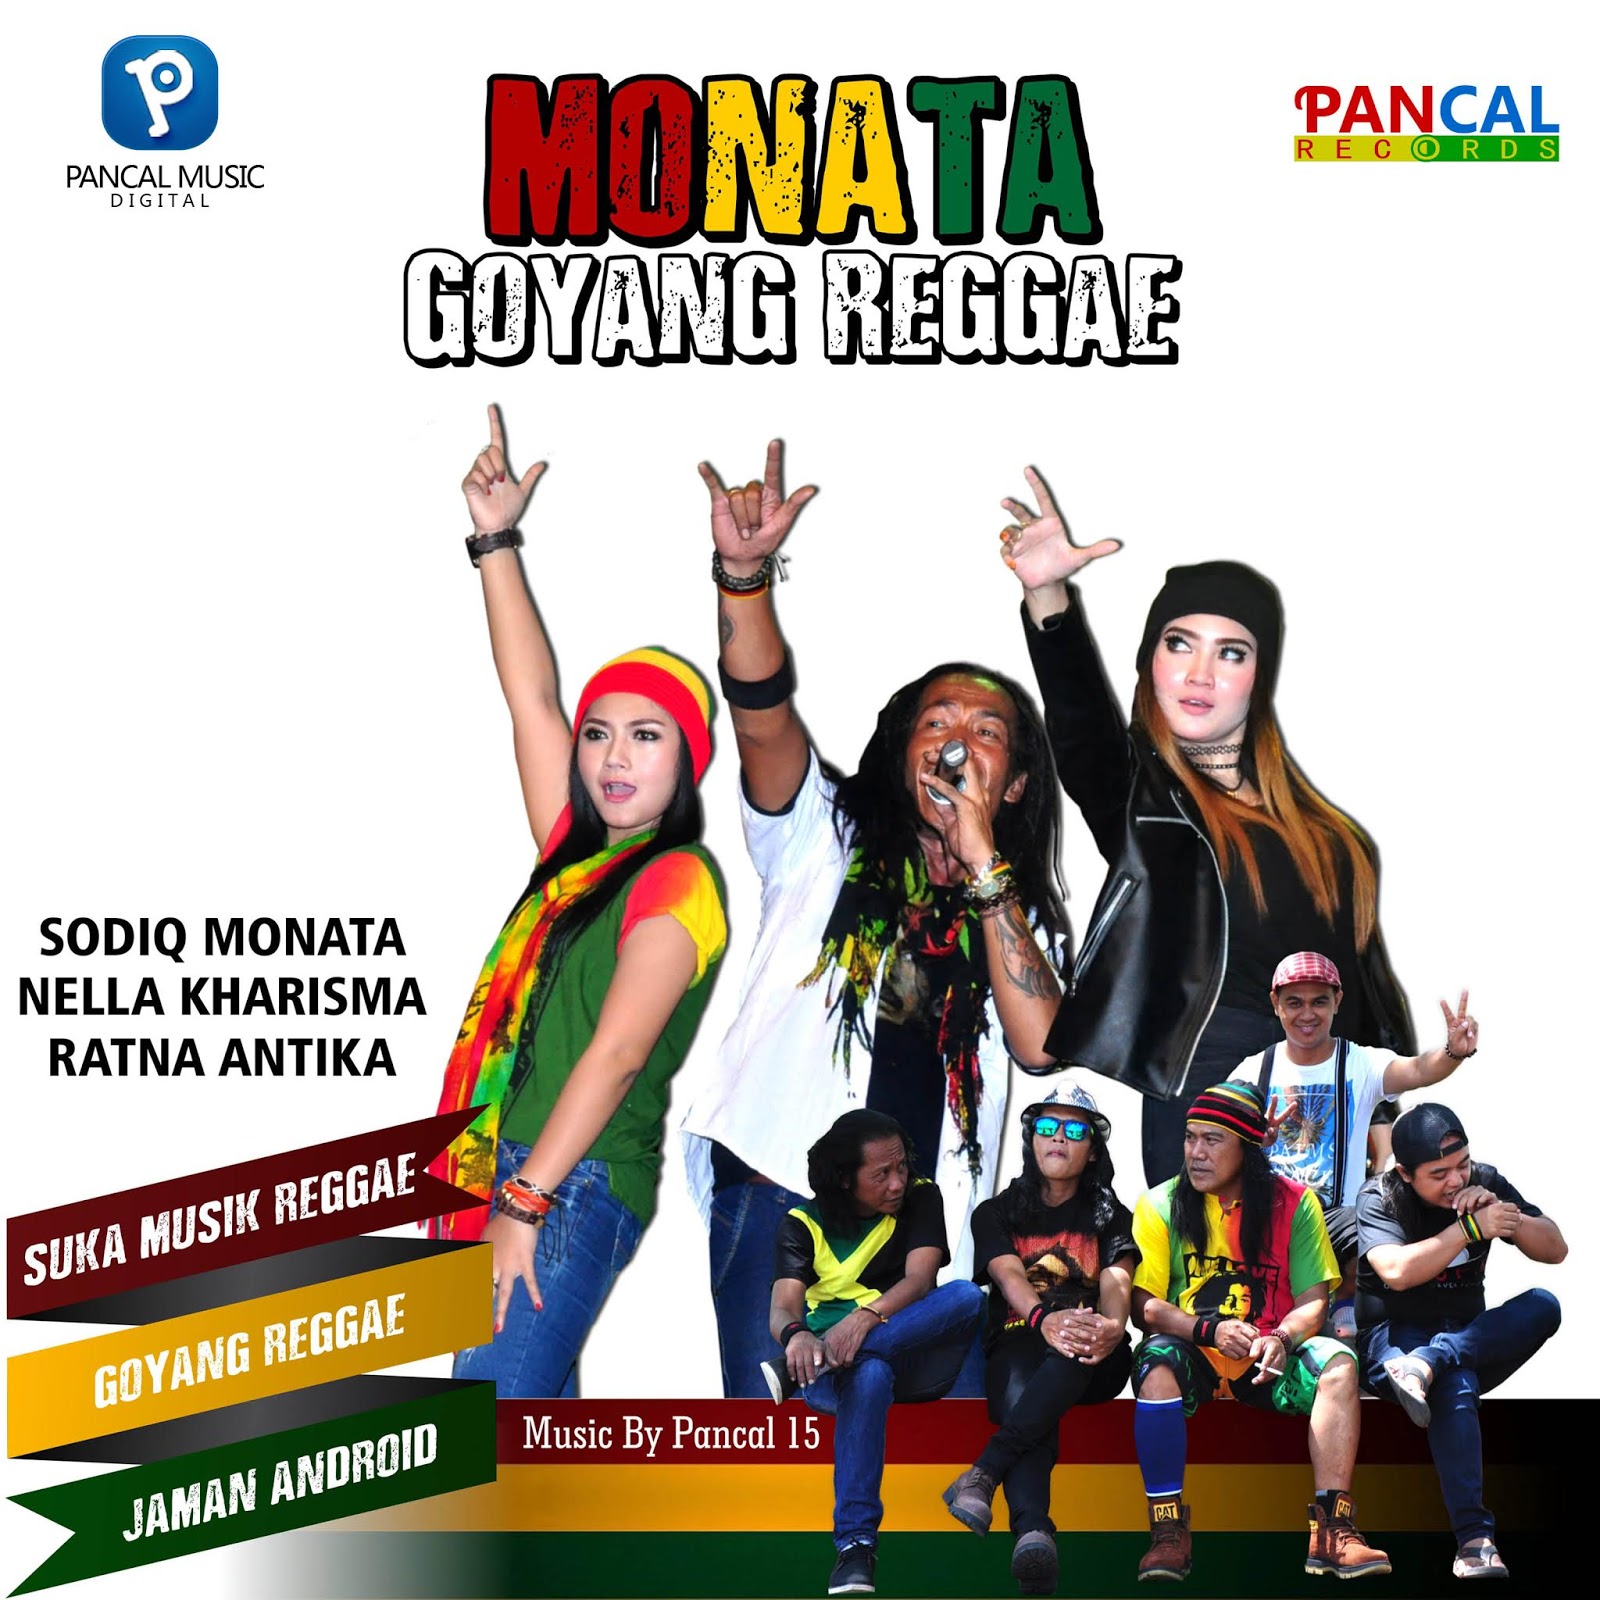 download mp3 dangdut koplo monata